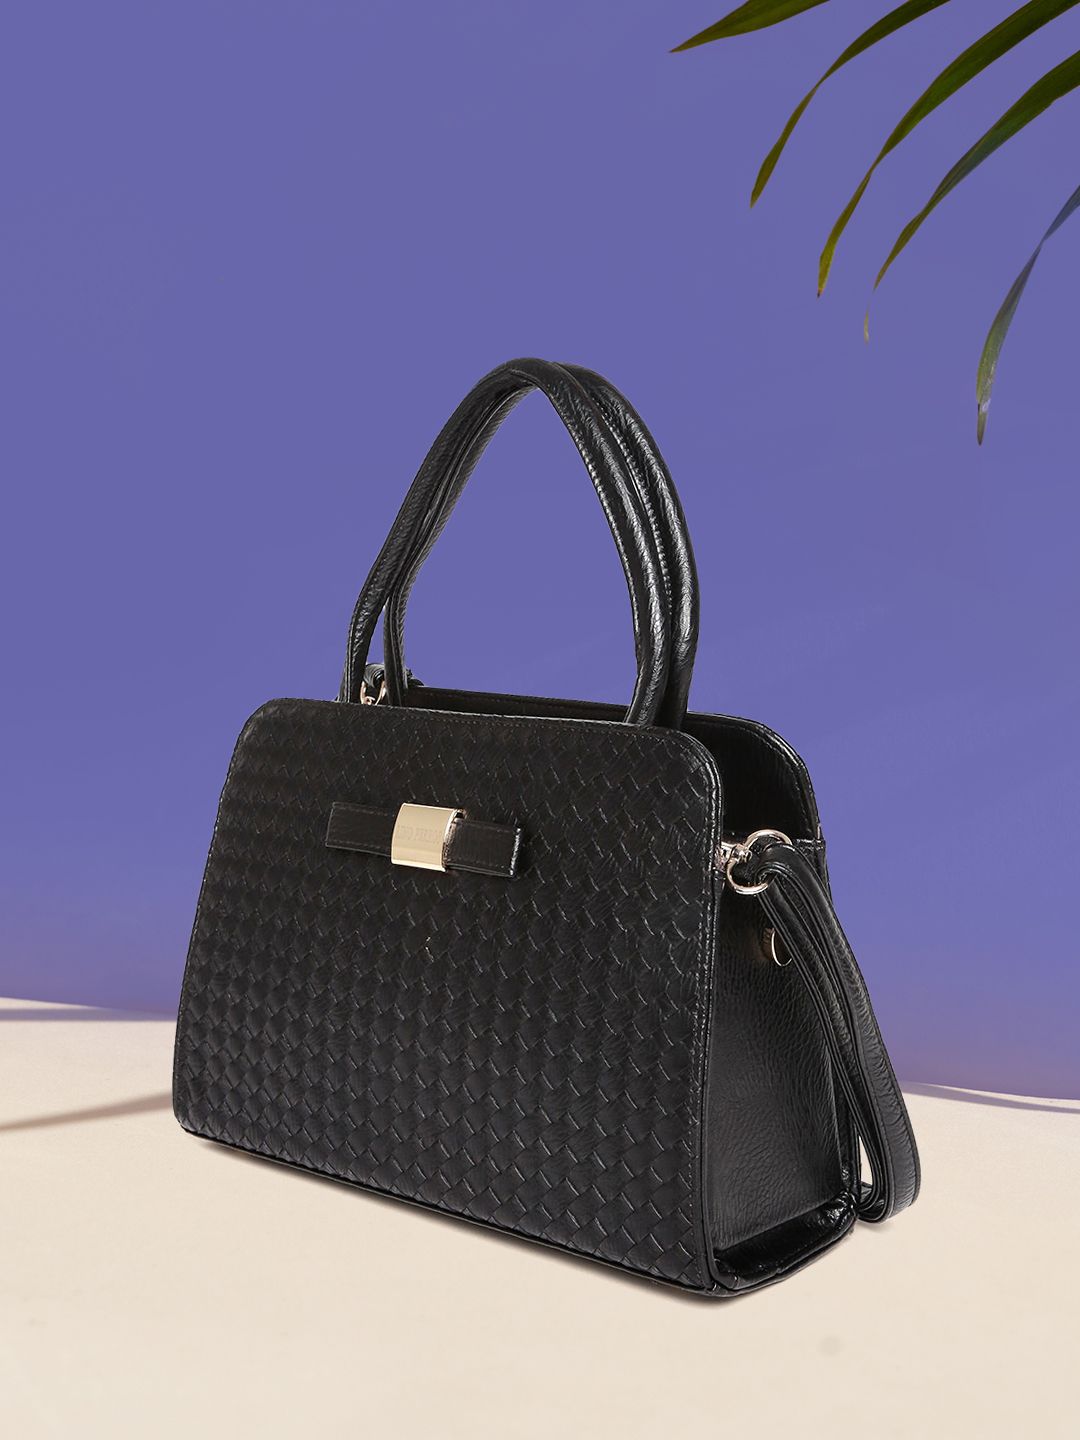 Lino Perros Black Basket Weave Patterned Handbag Price in India